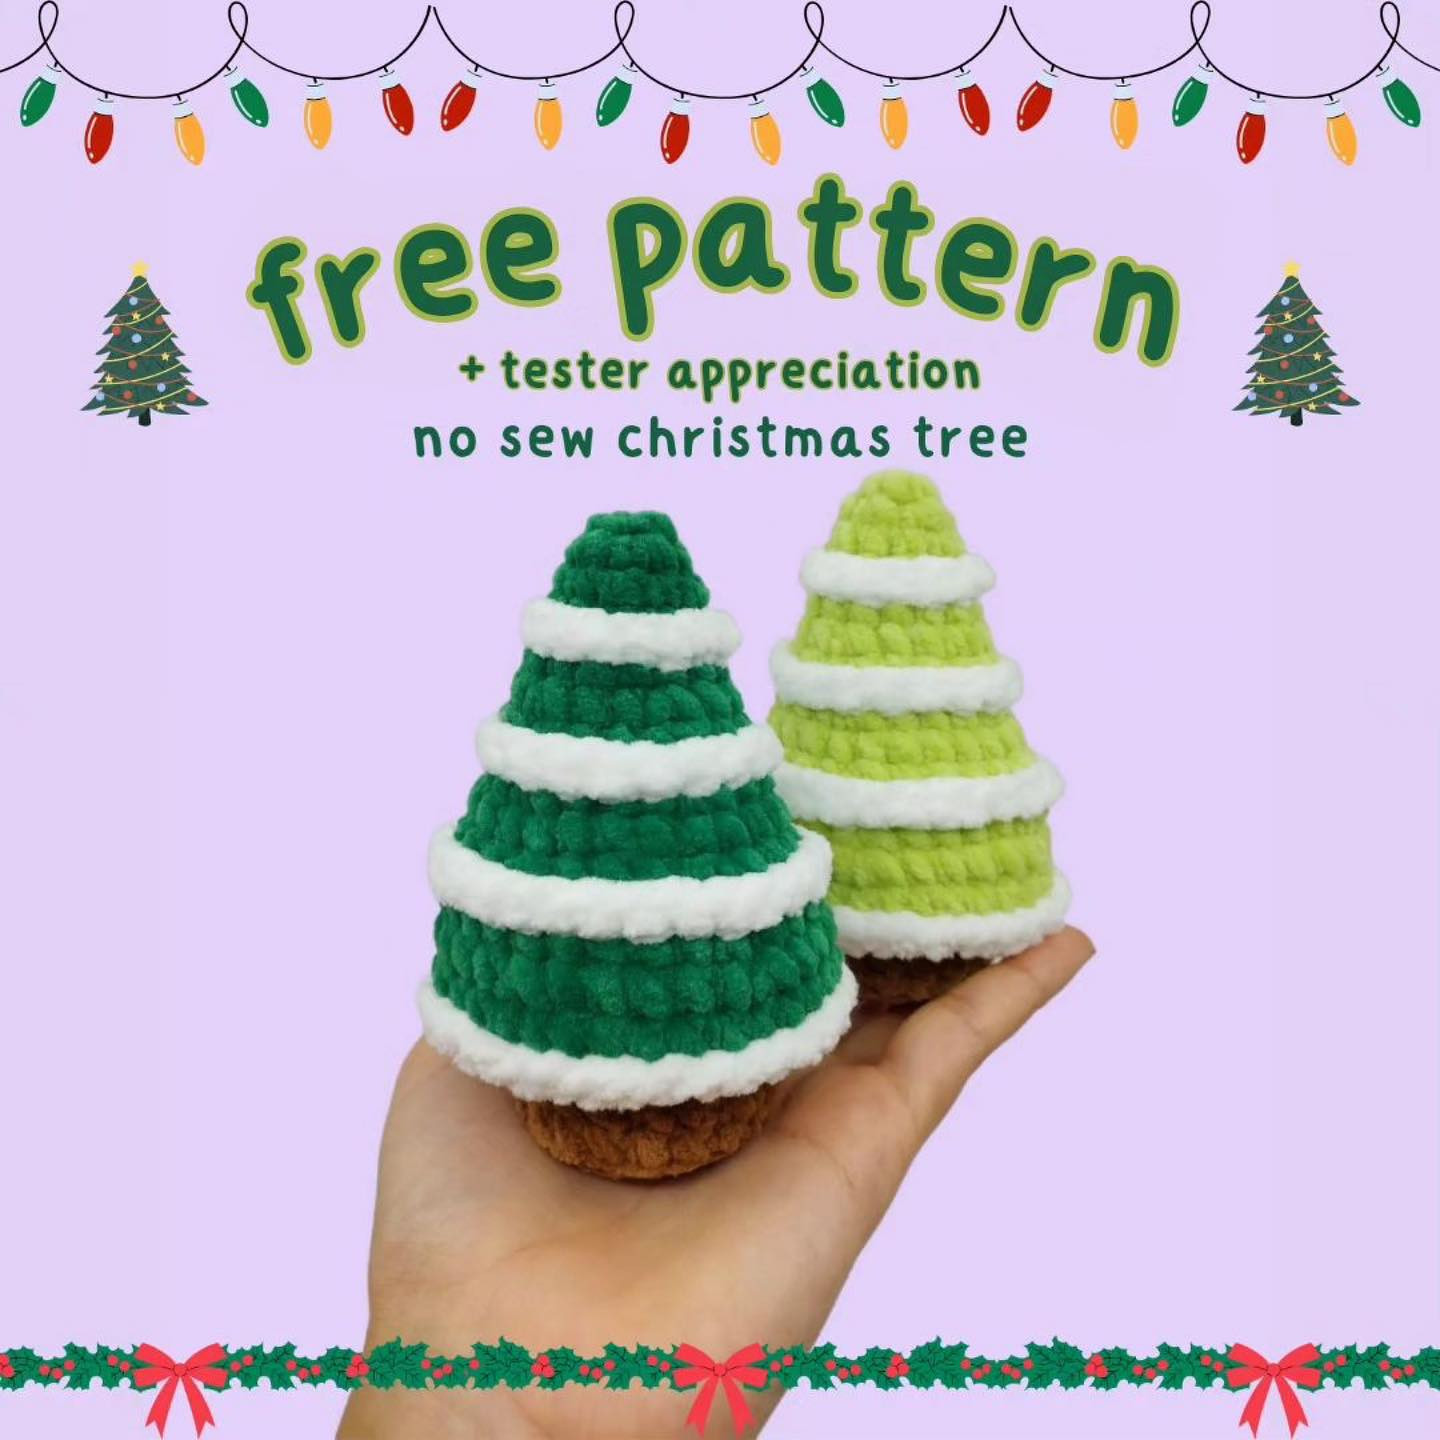 free pattern no sew christmas tree